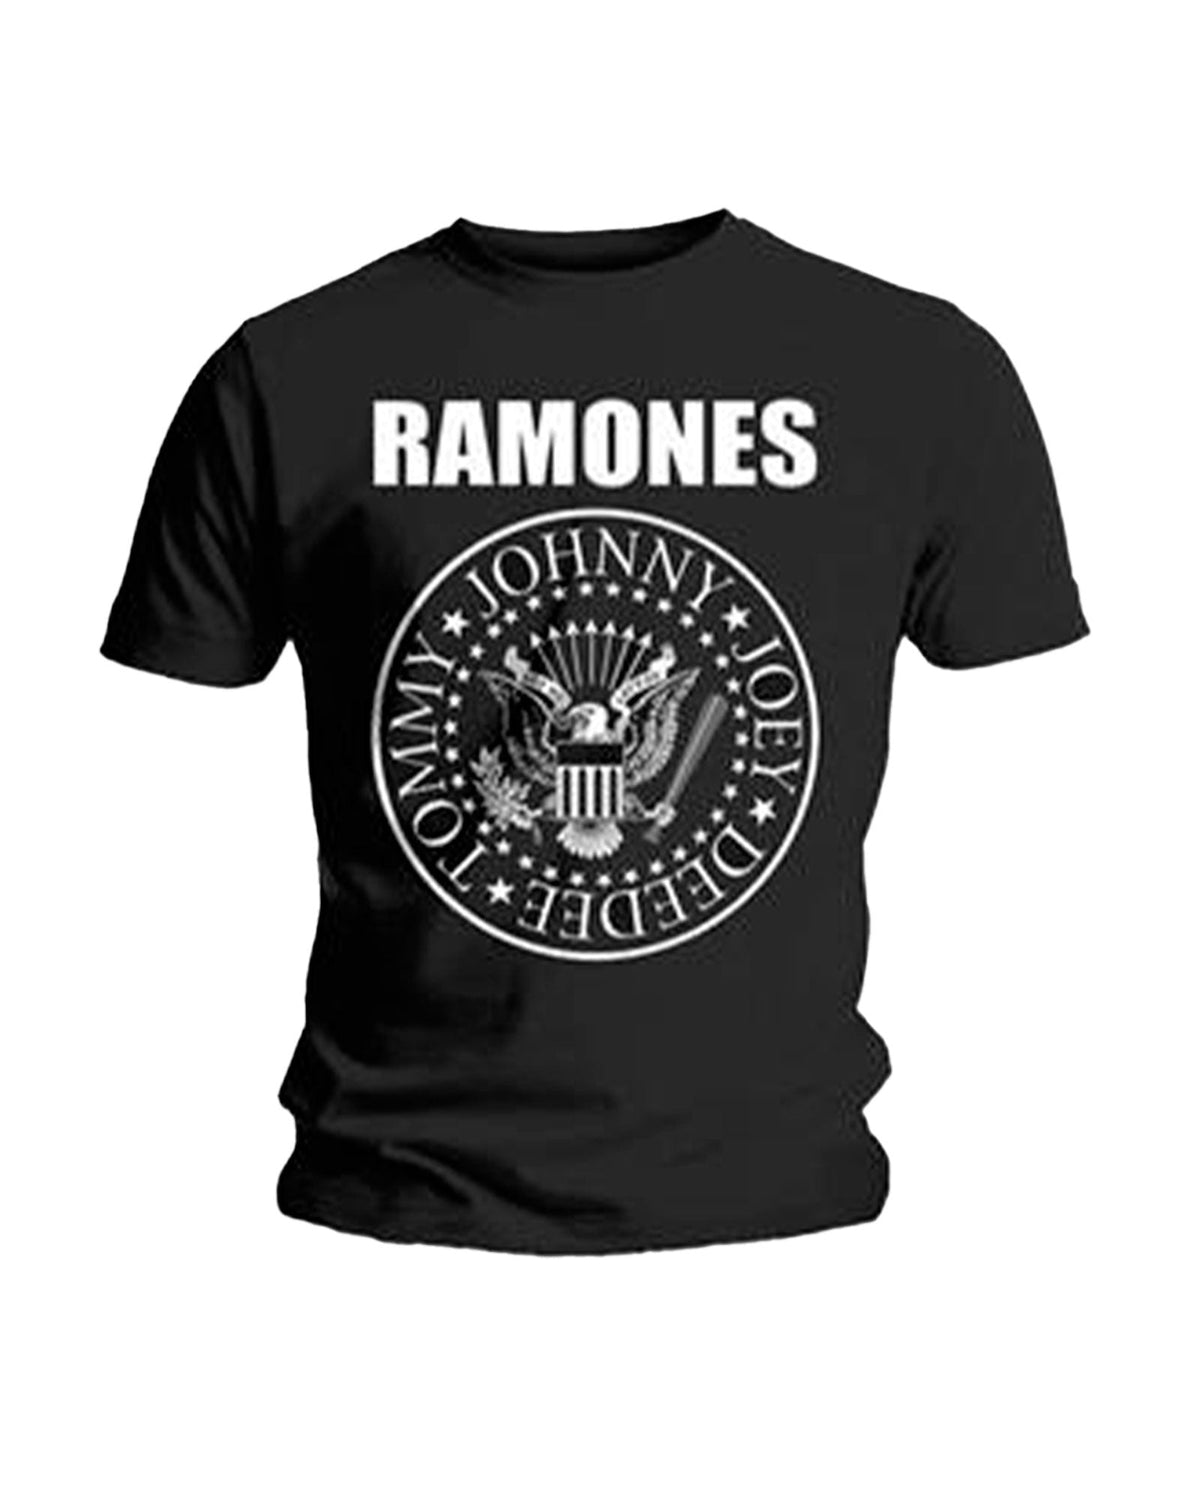 Ramones - Camiseta "Hey Ho (Front & Back)" Unisex - D2fy · Rocktud - Rocktud